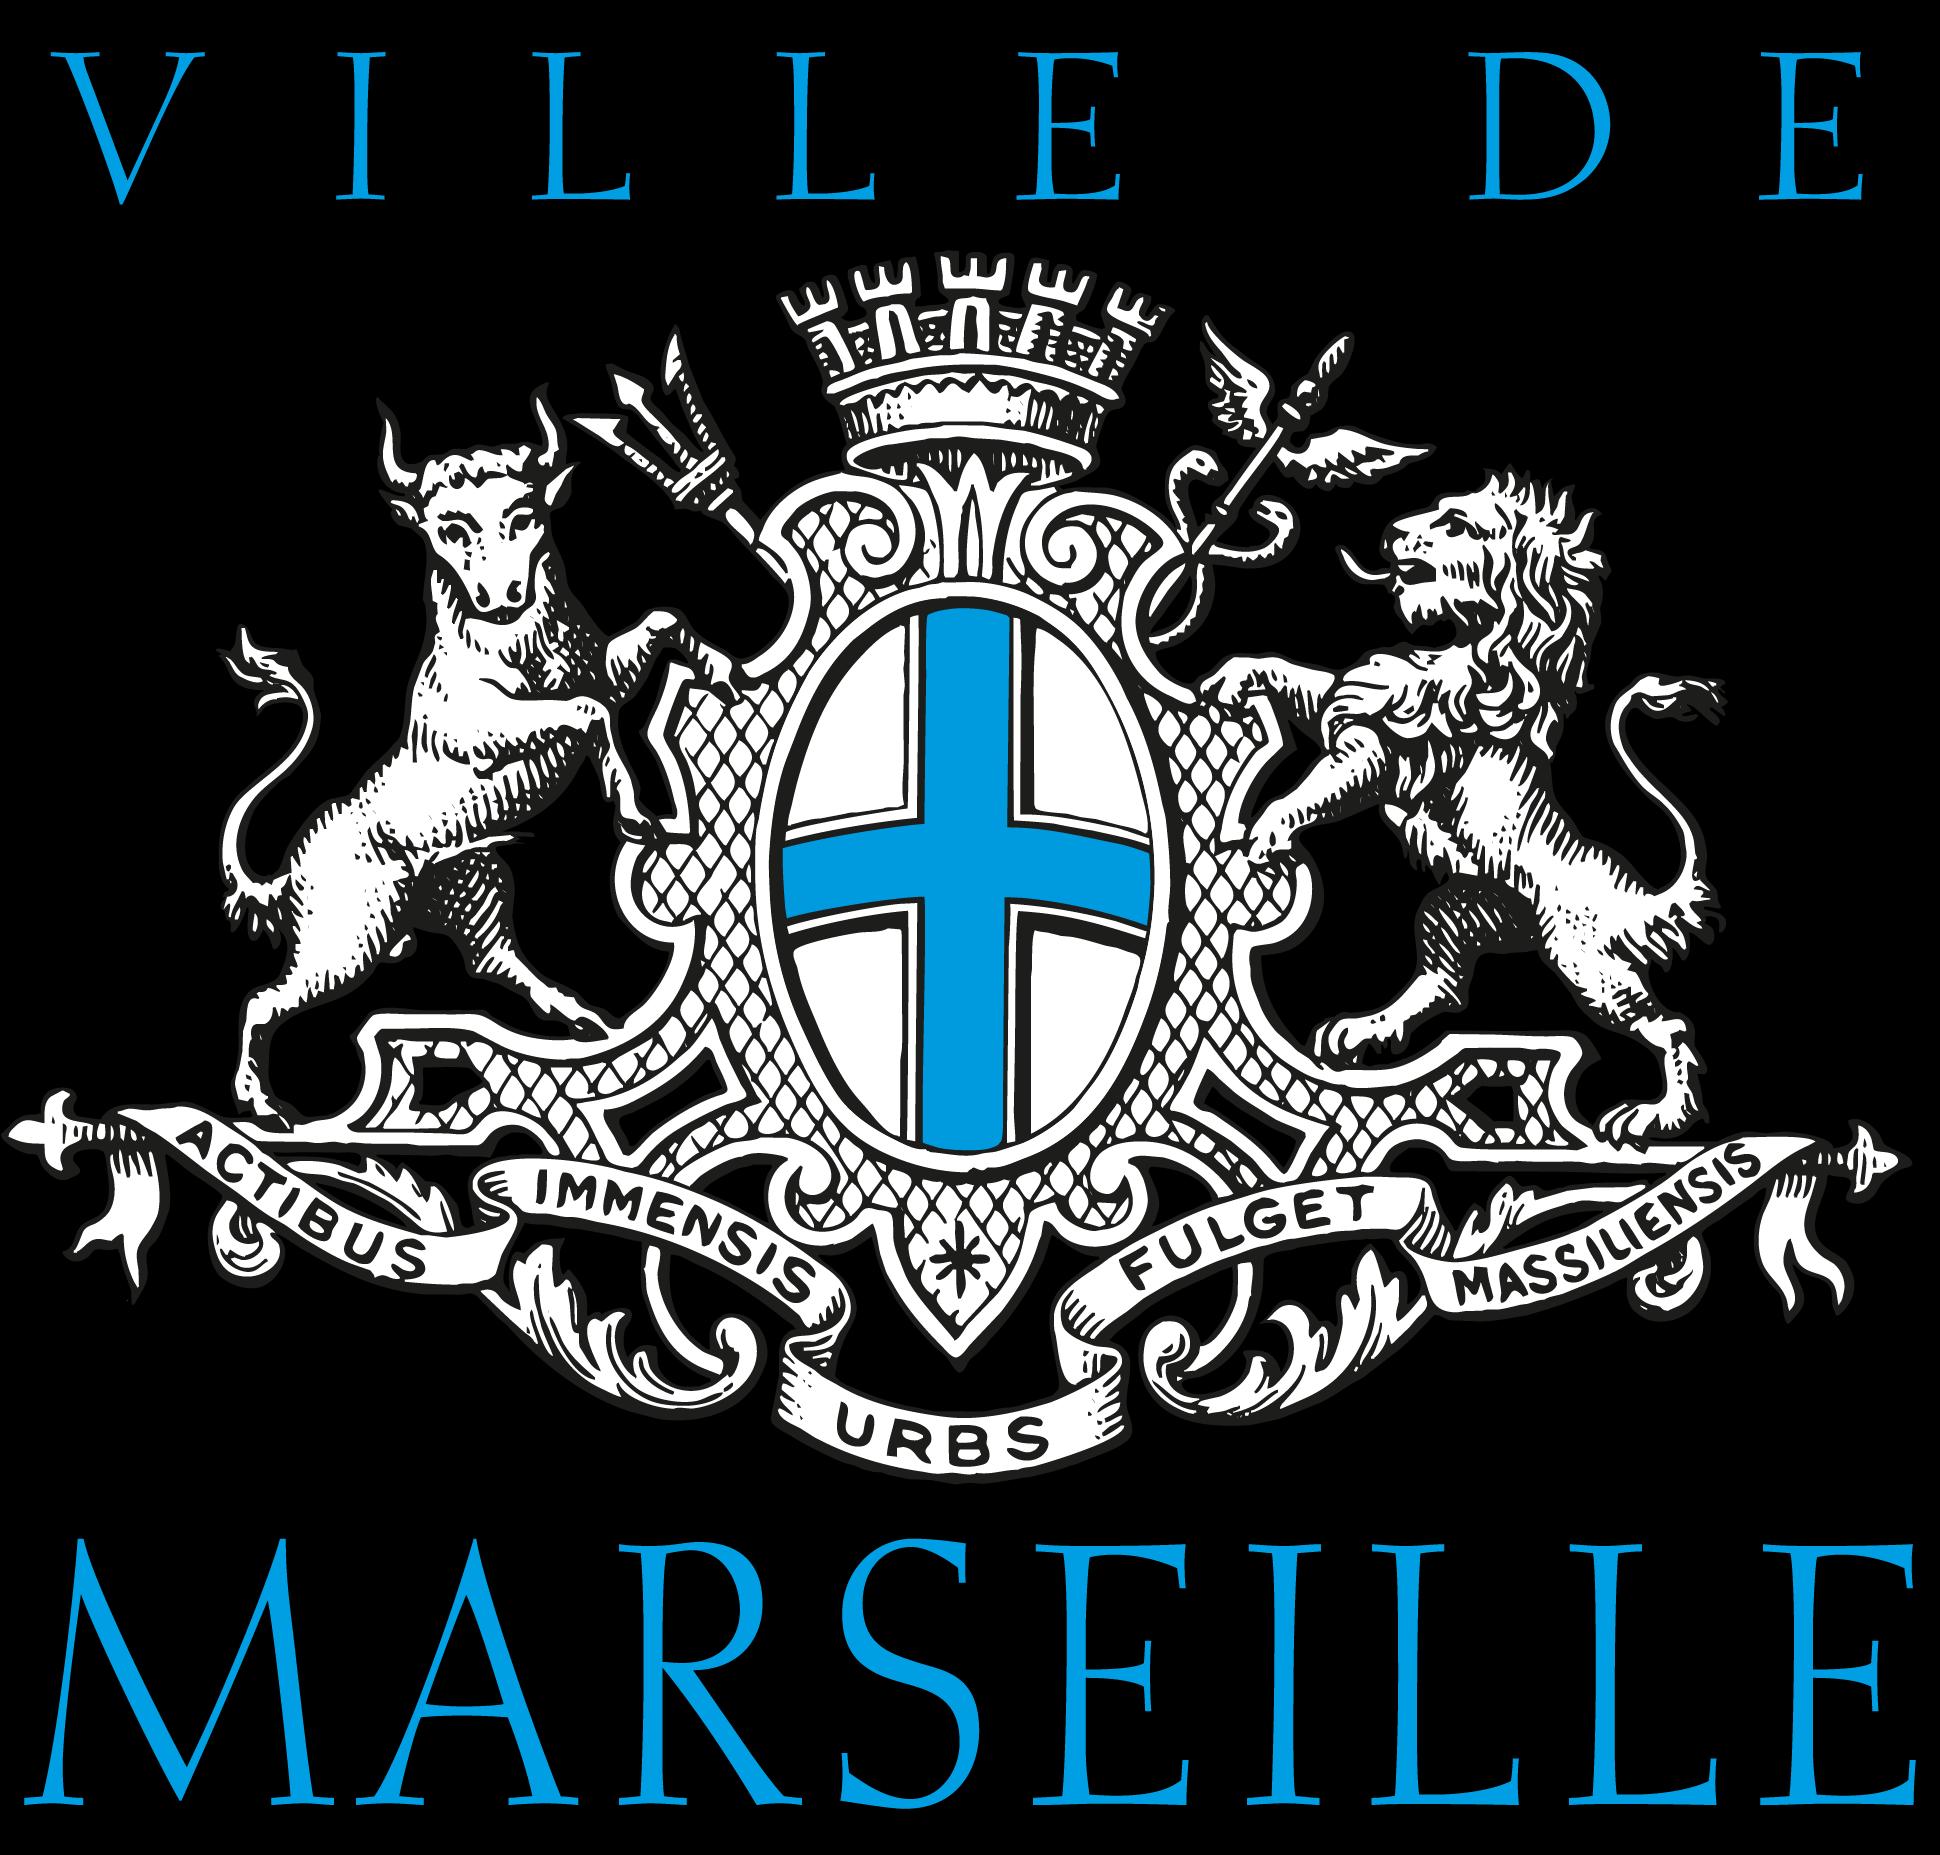 Stade Eynaud Moricelli Marseille